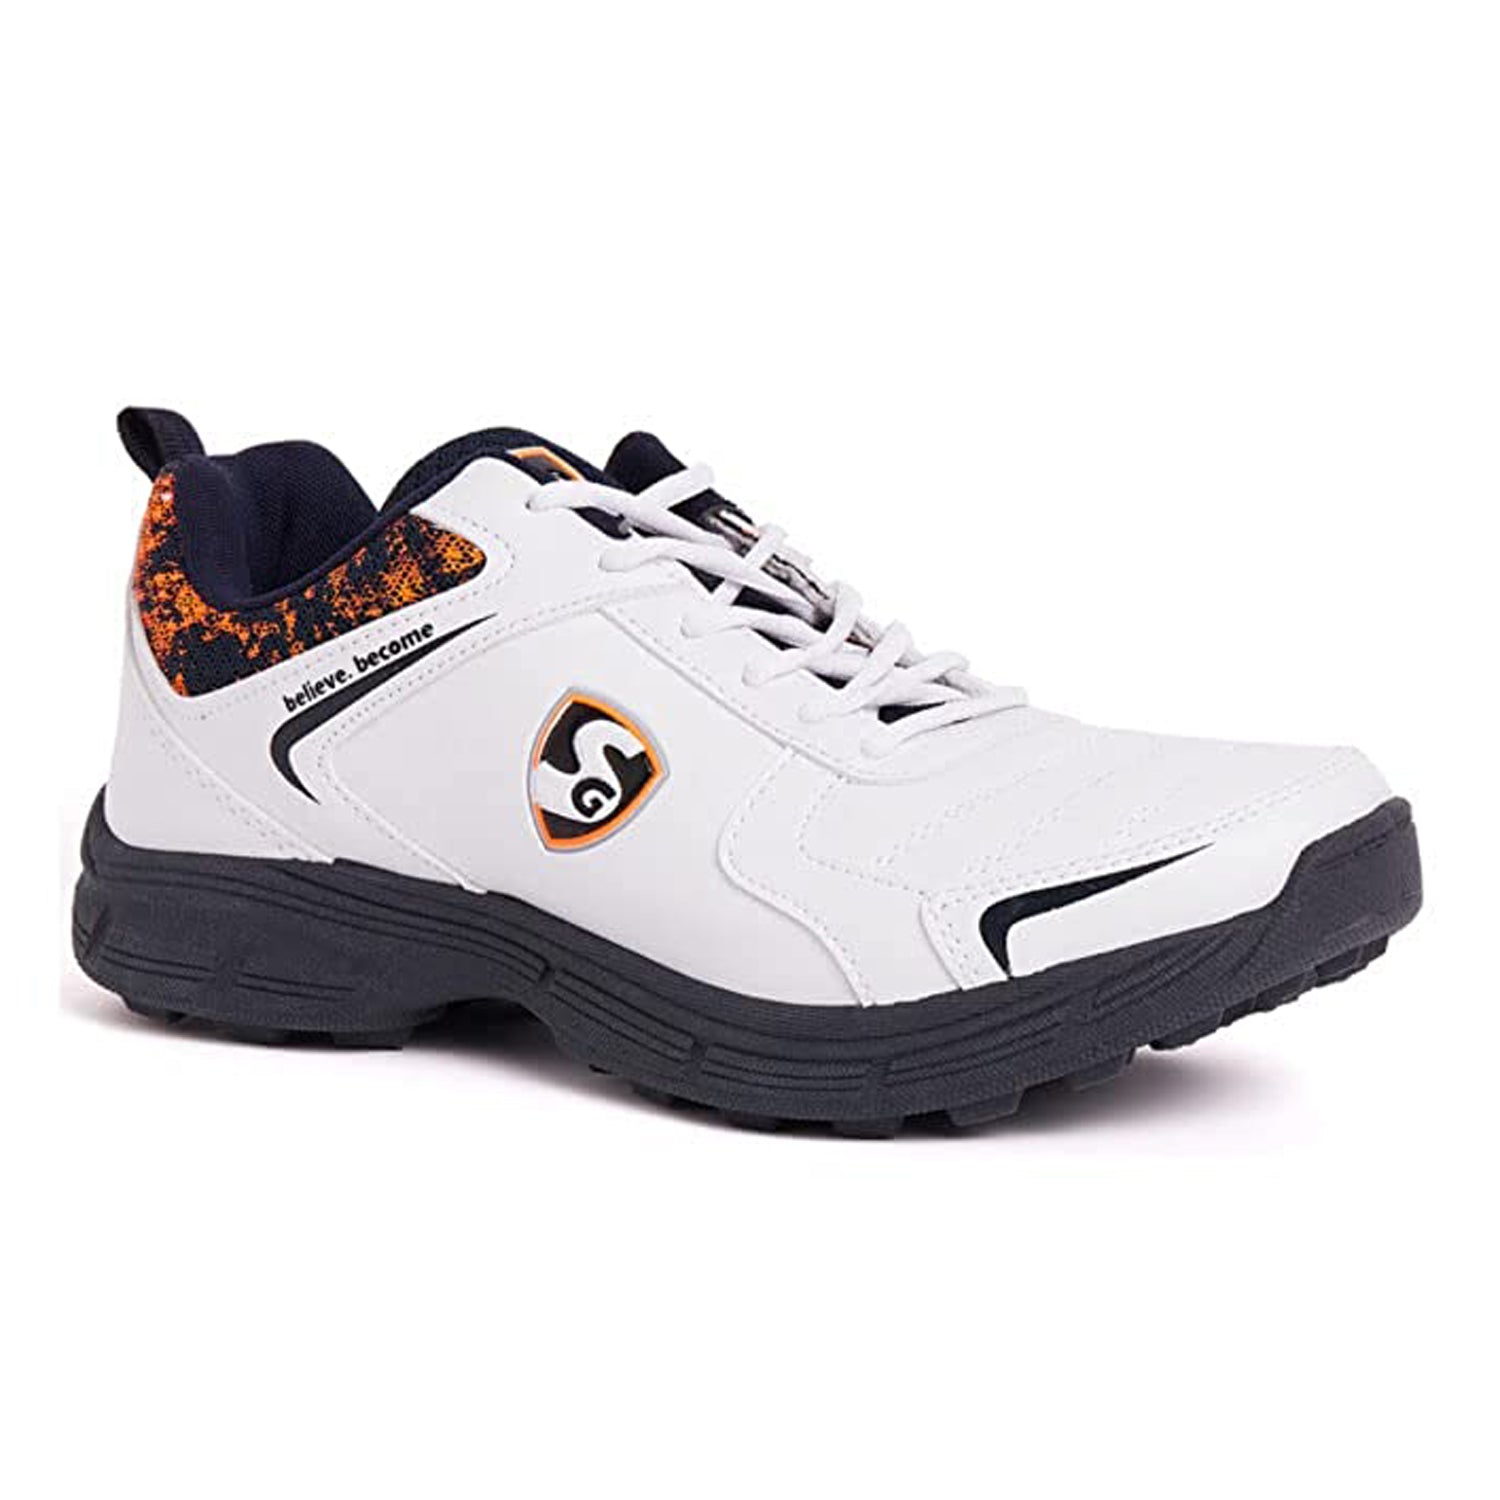 SG Savage Cricket Shoe - Best Price online Prokicksports.com